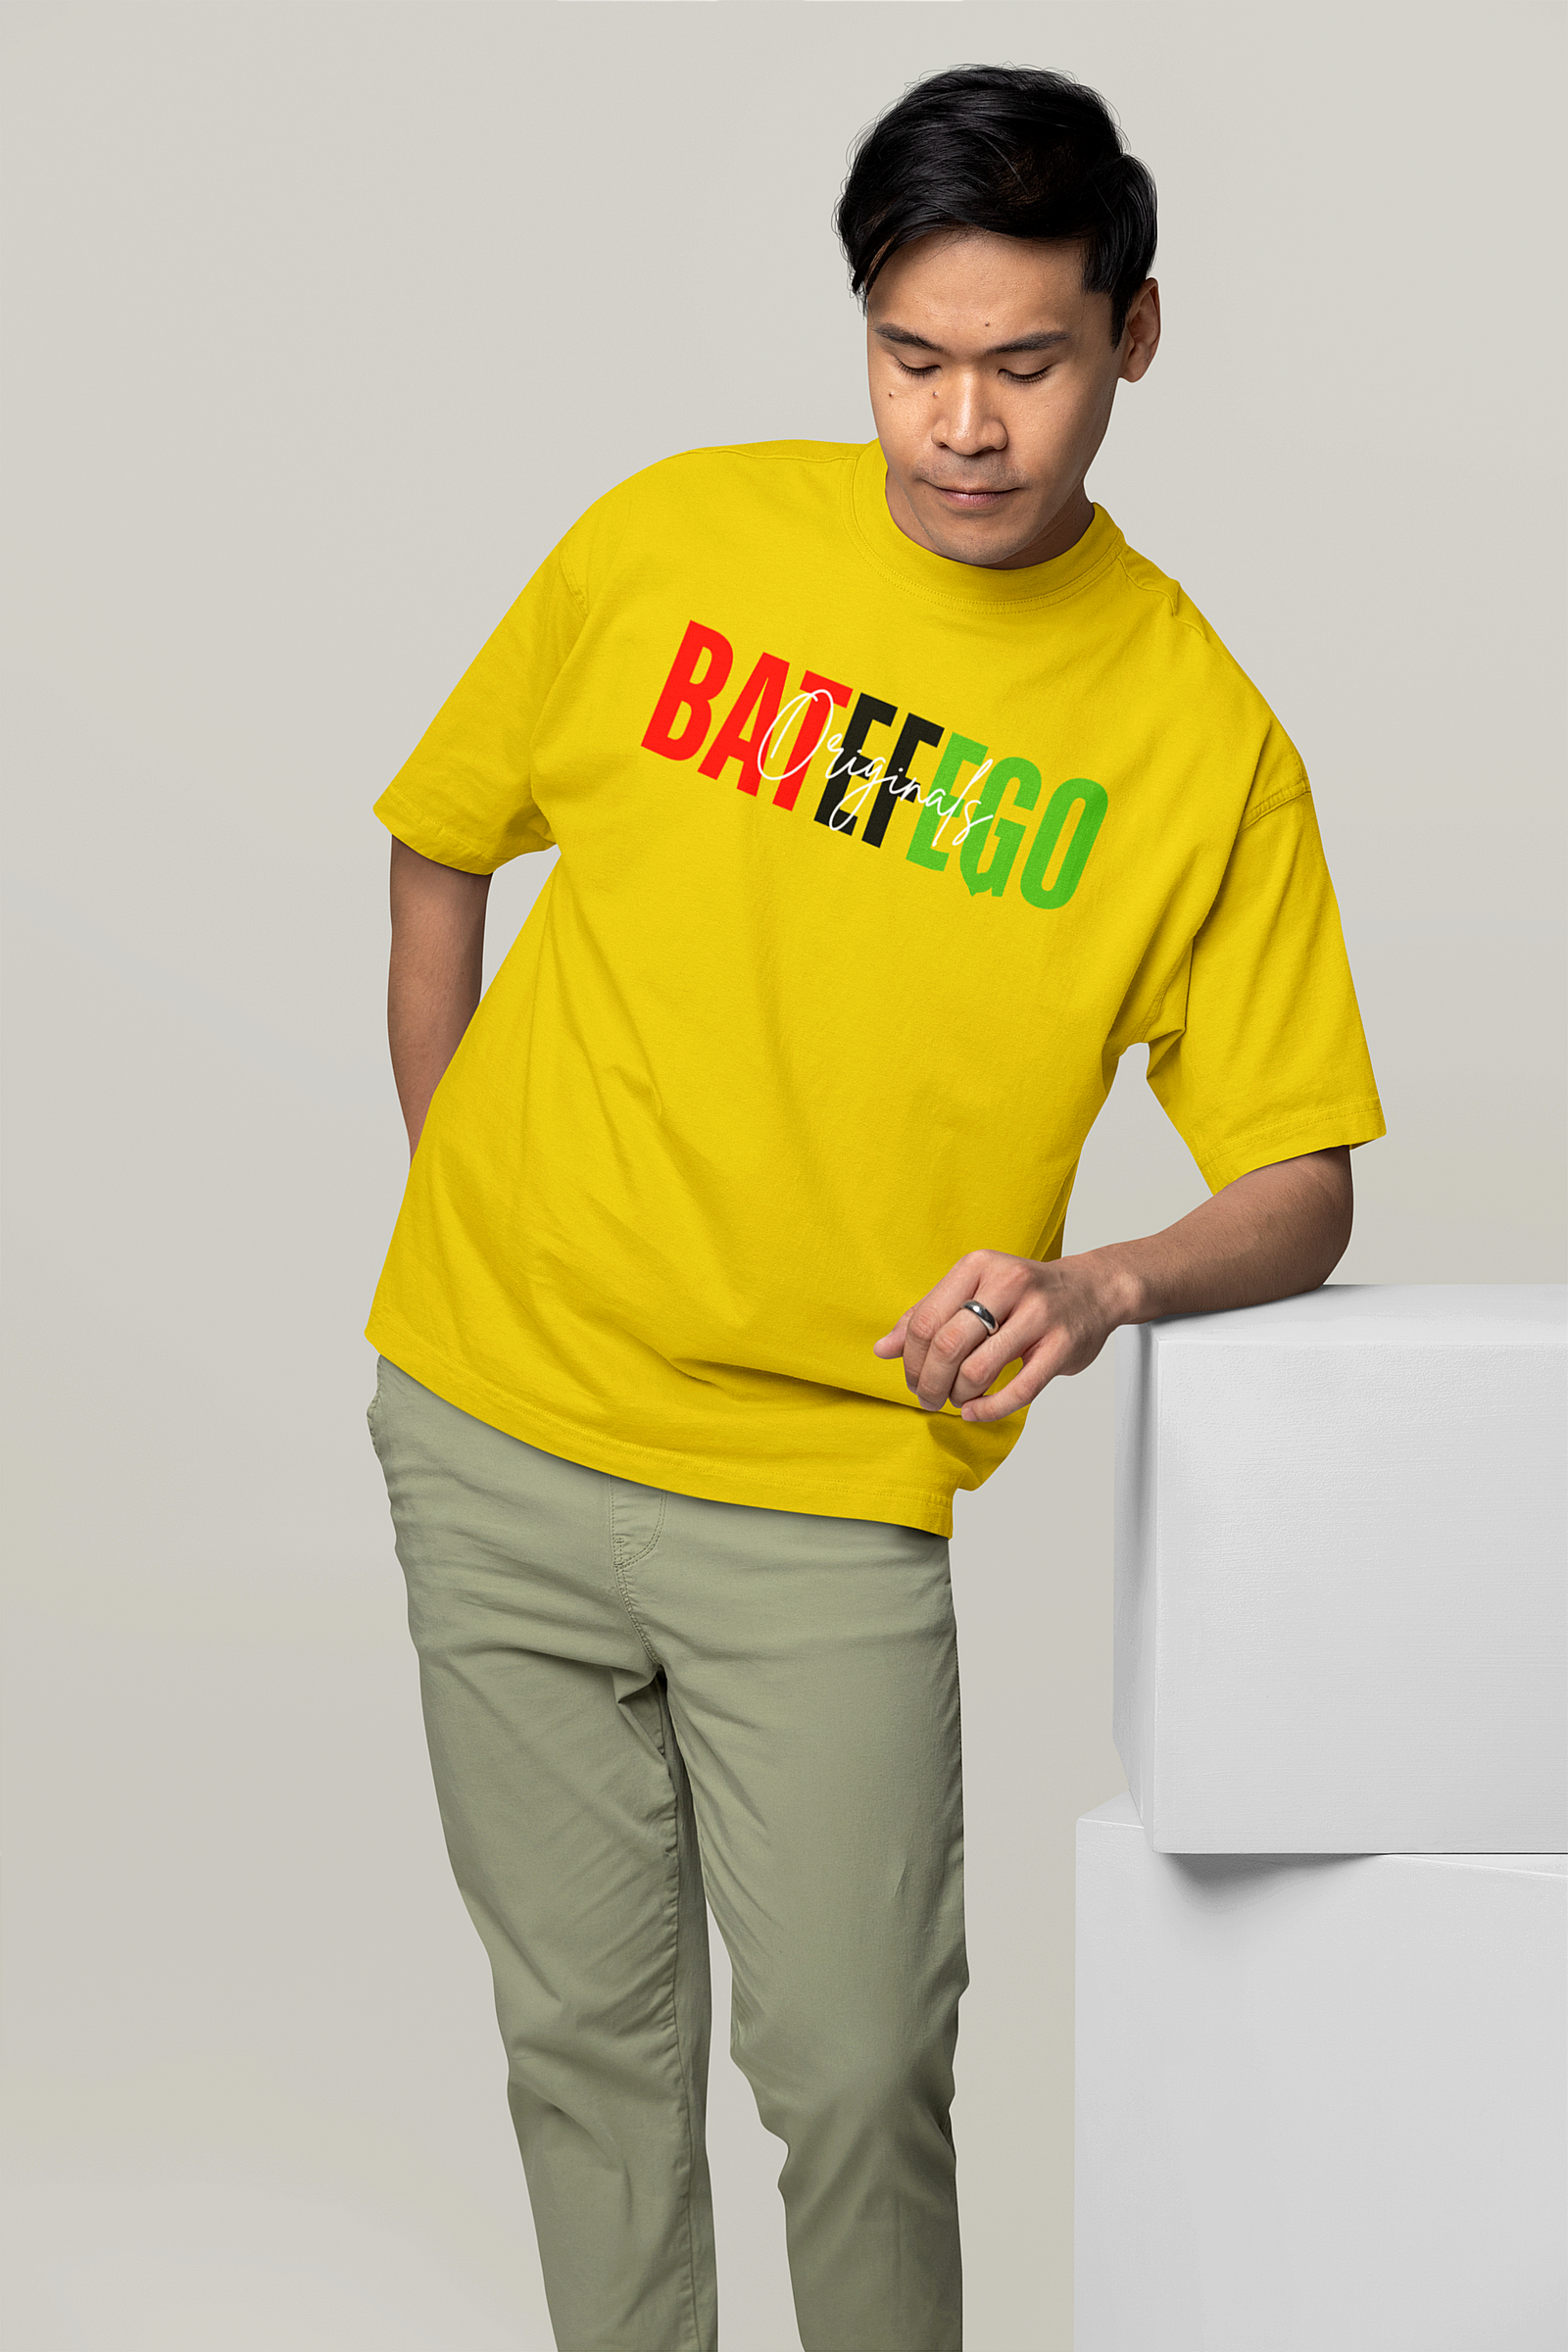 Batefego For the contemporary african community 24 Tshirt 411 - batefego streetwear fashion